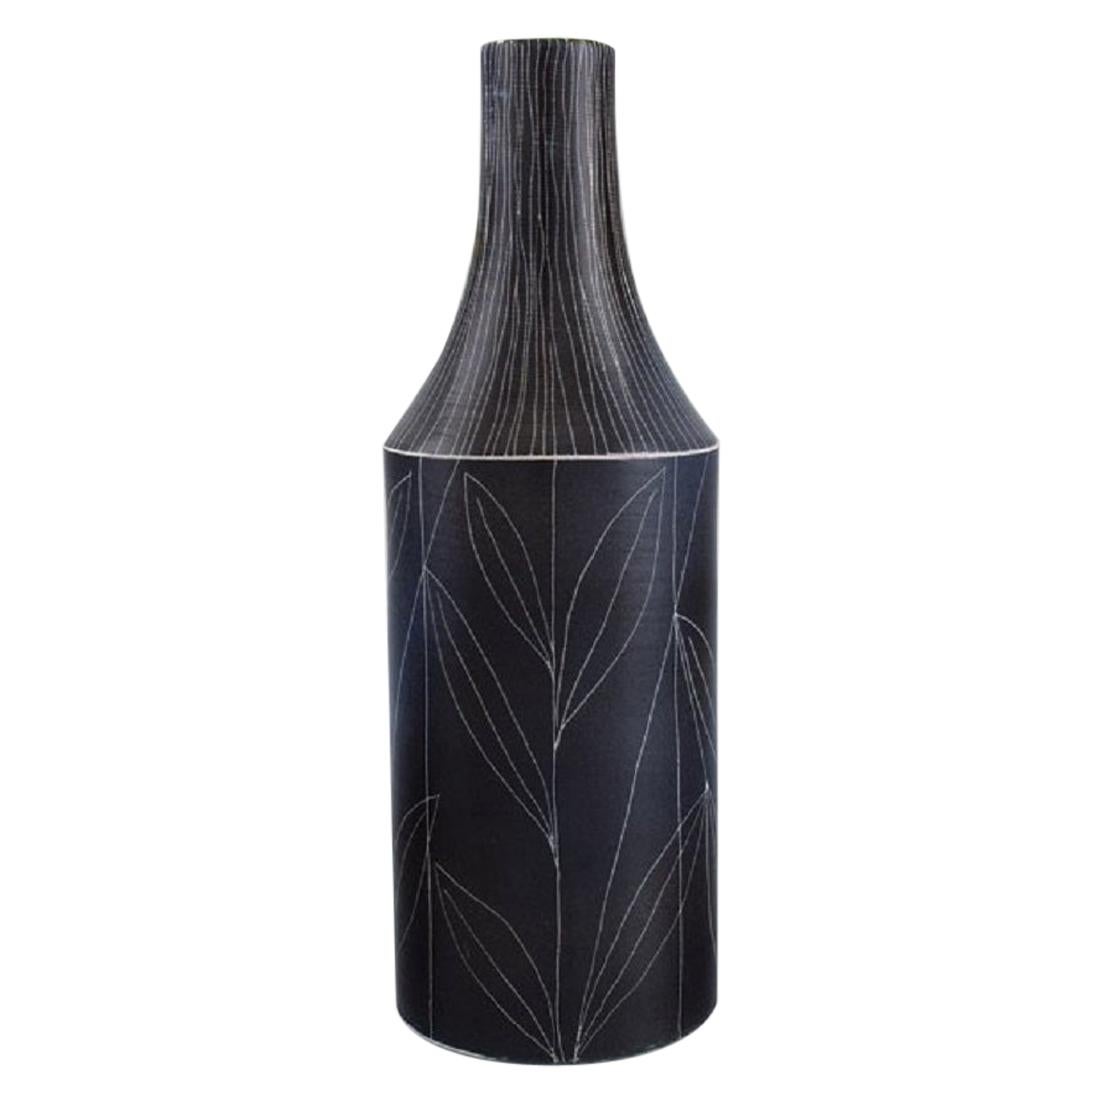 Mari Simmulson for Upsala-Ekeby, Vase in Glazed Stoneware For Sale